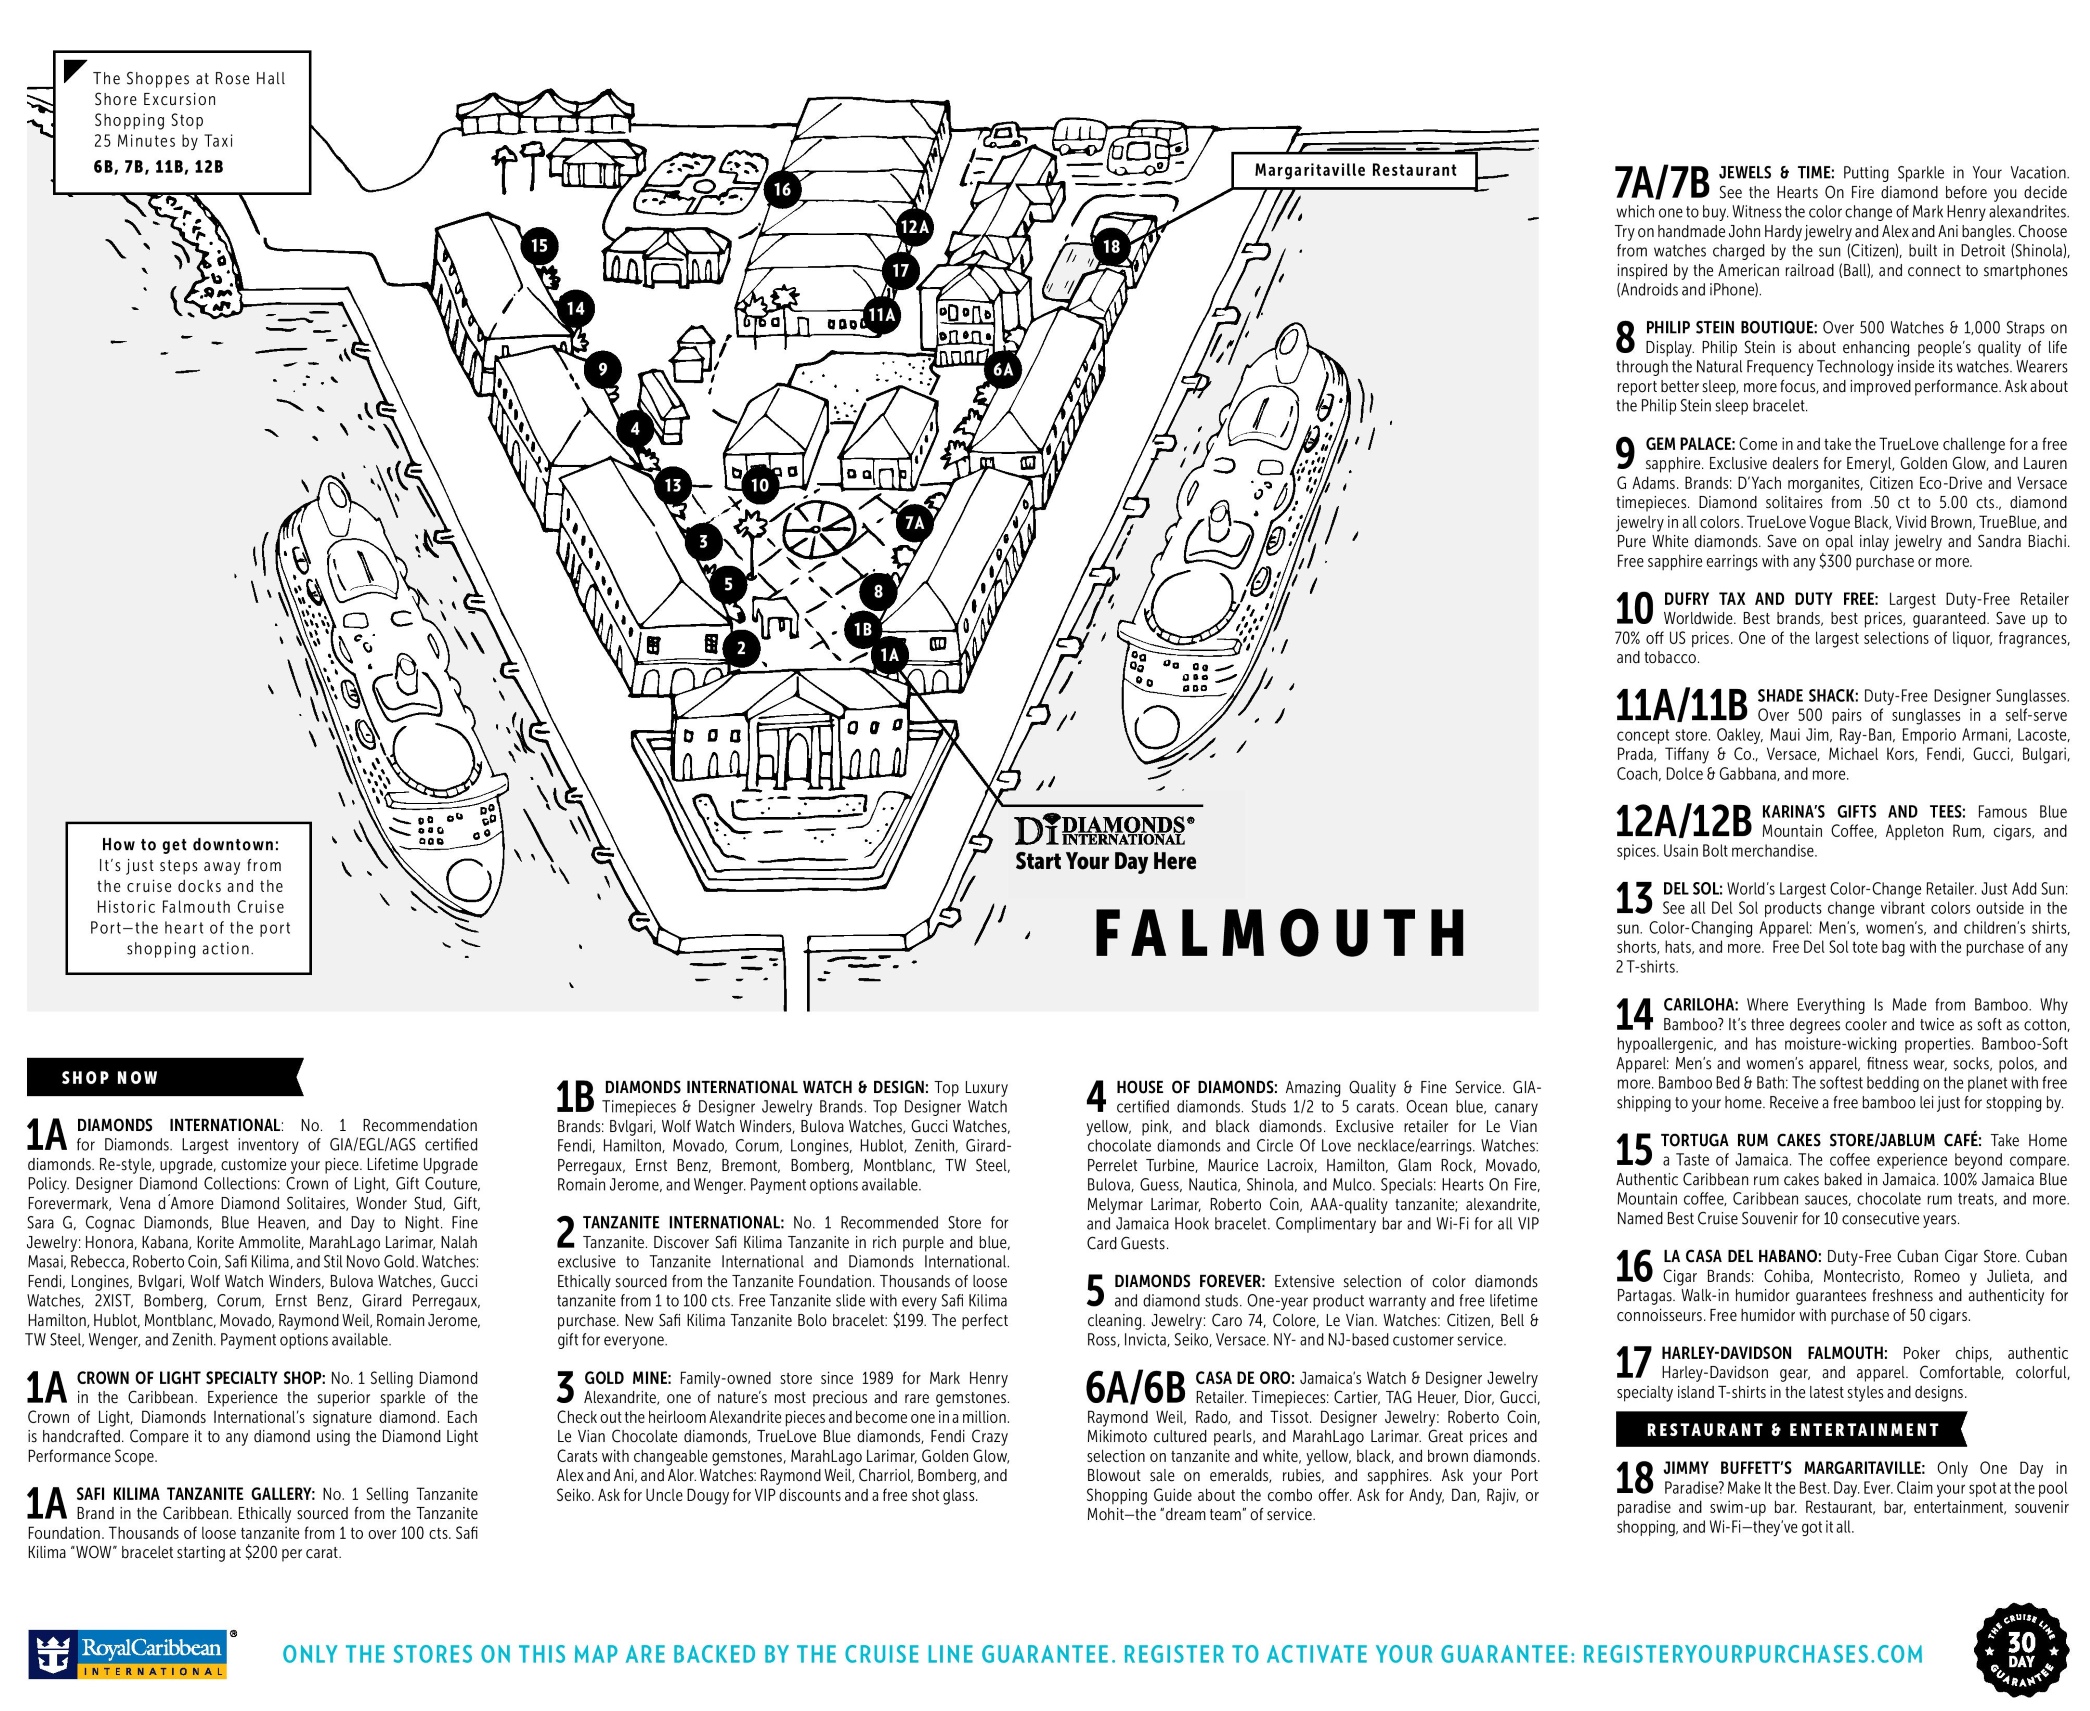 Port of Falmouth tourist map